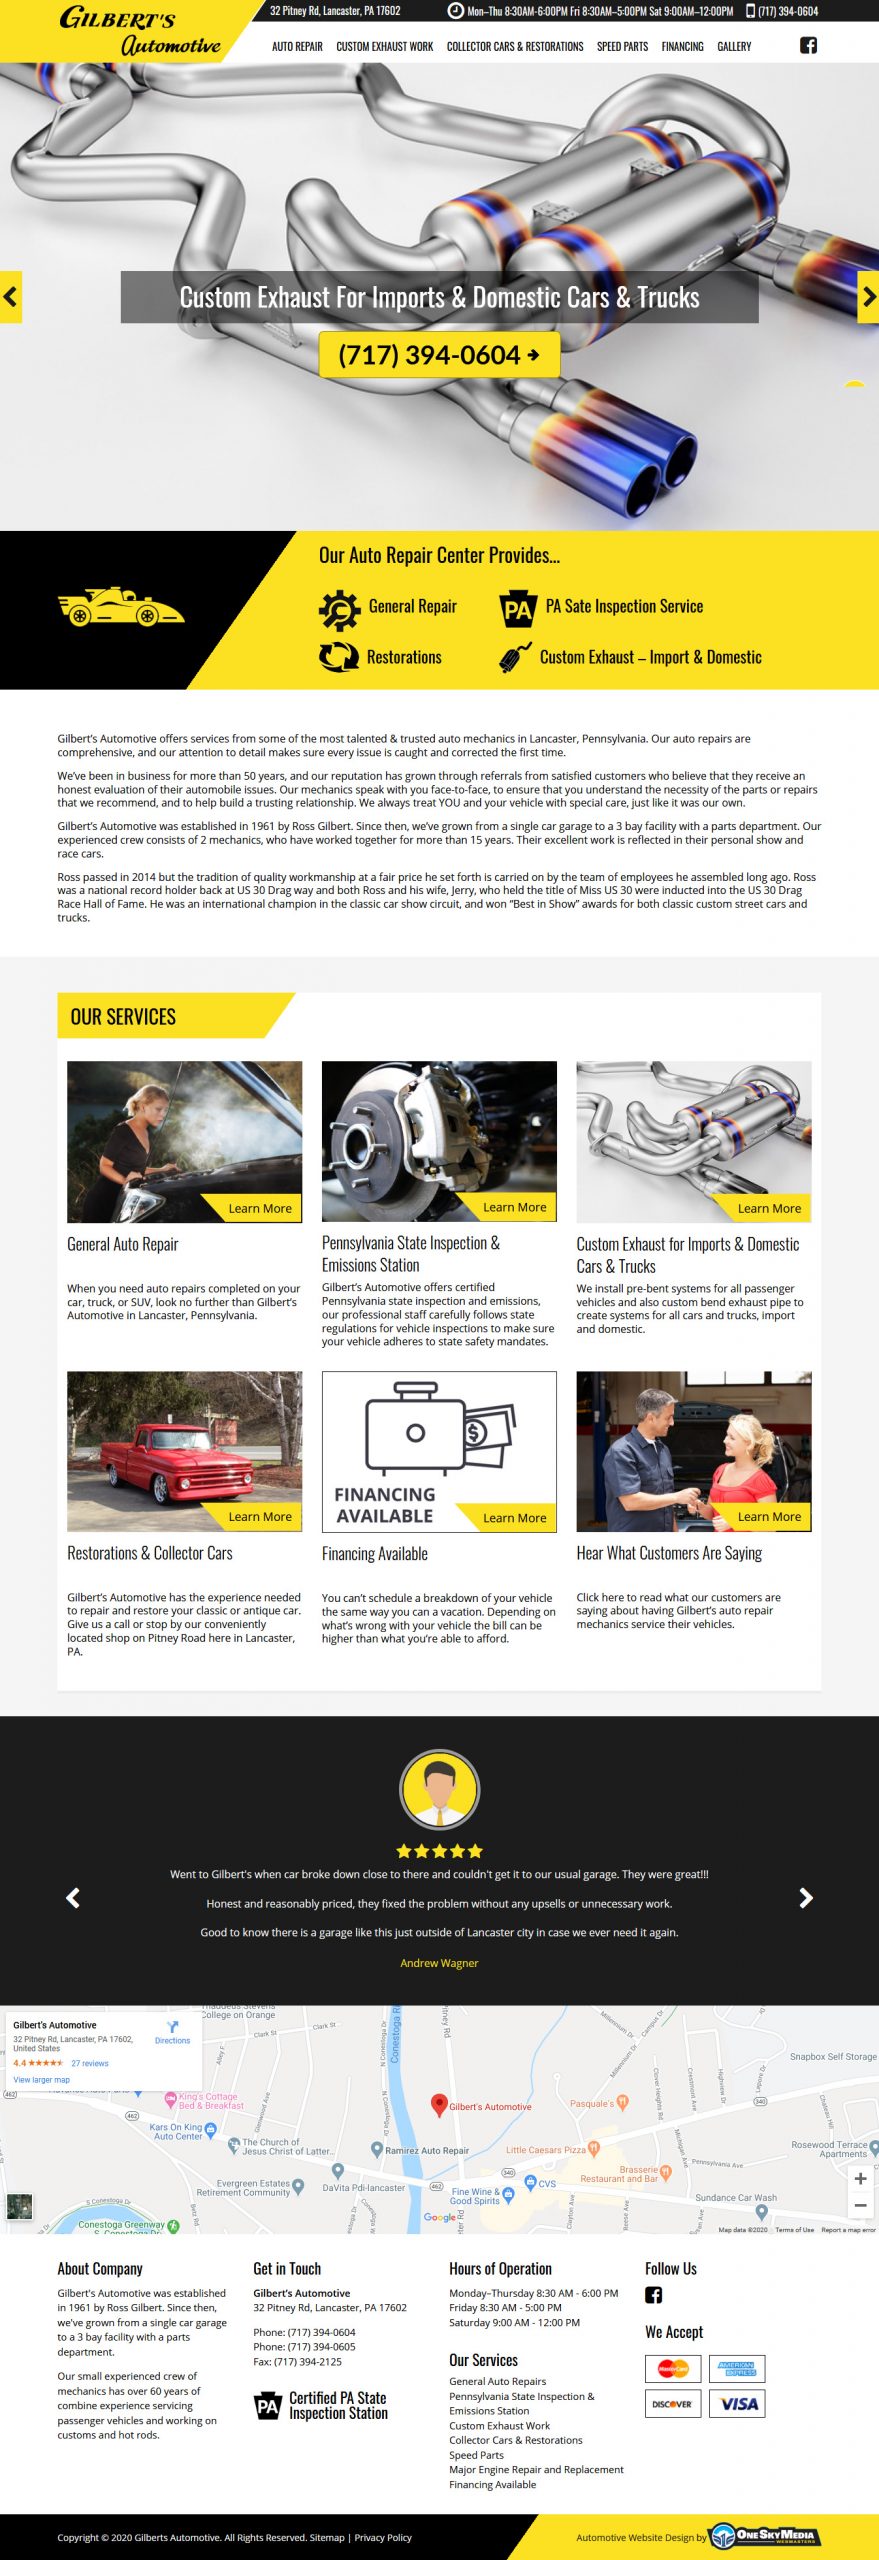 Gilberts Automobile Auto Repair Center Website Design